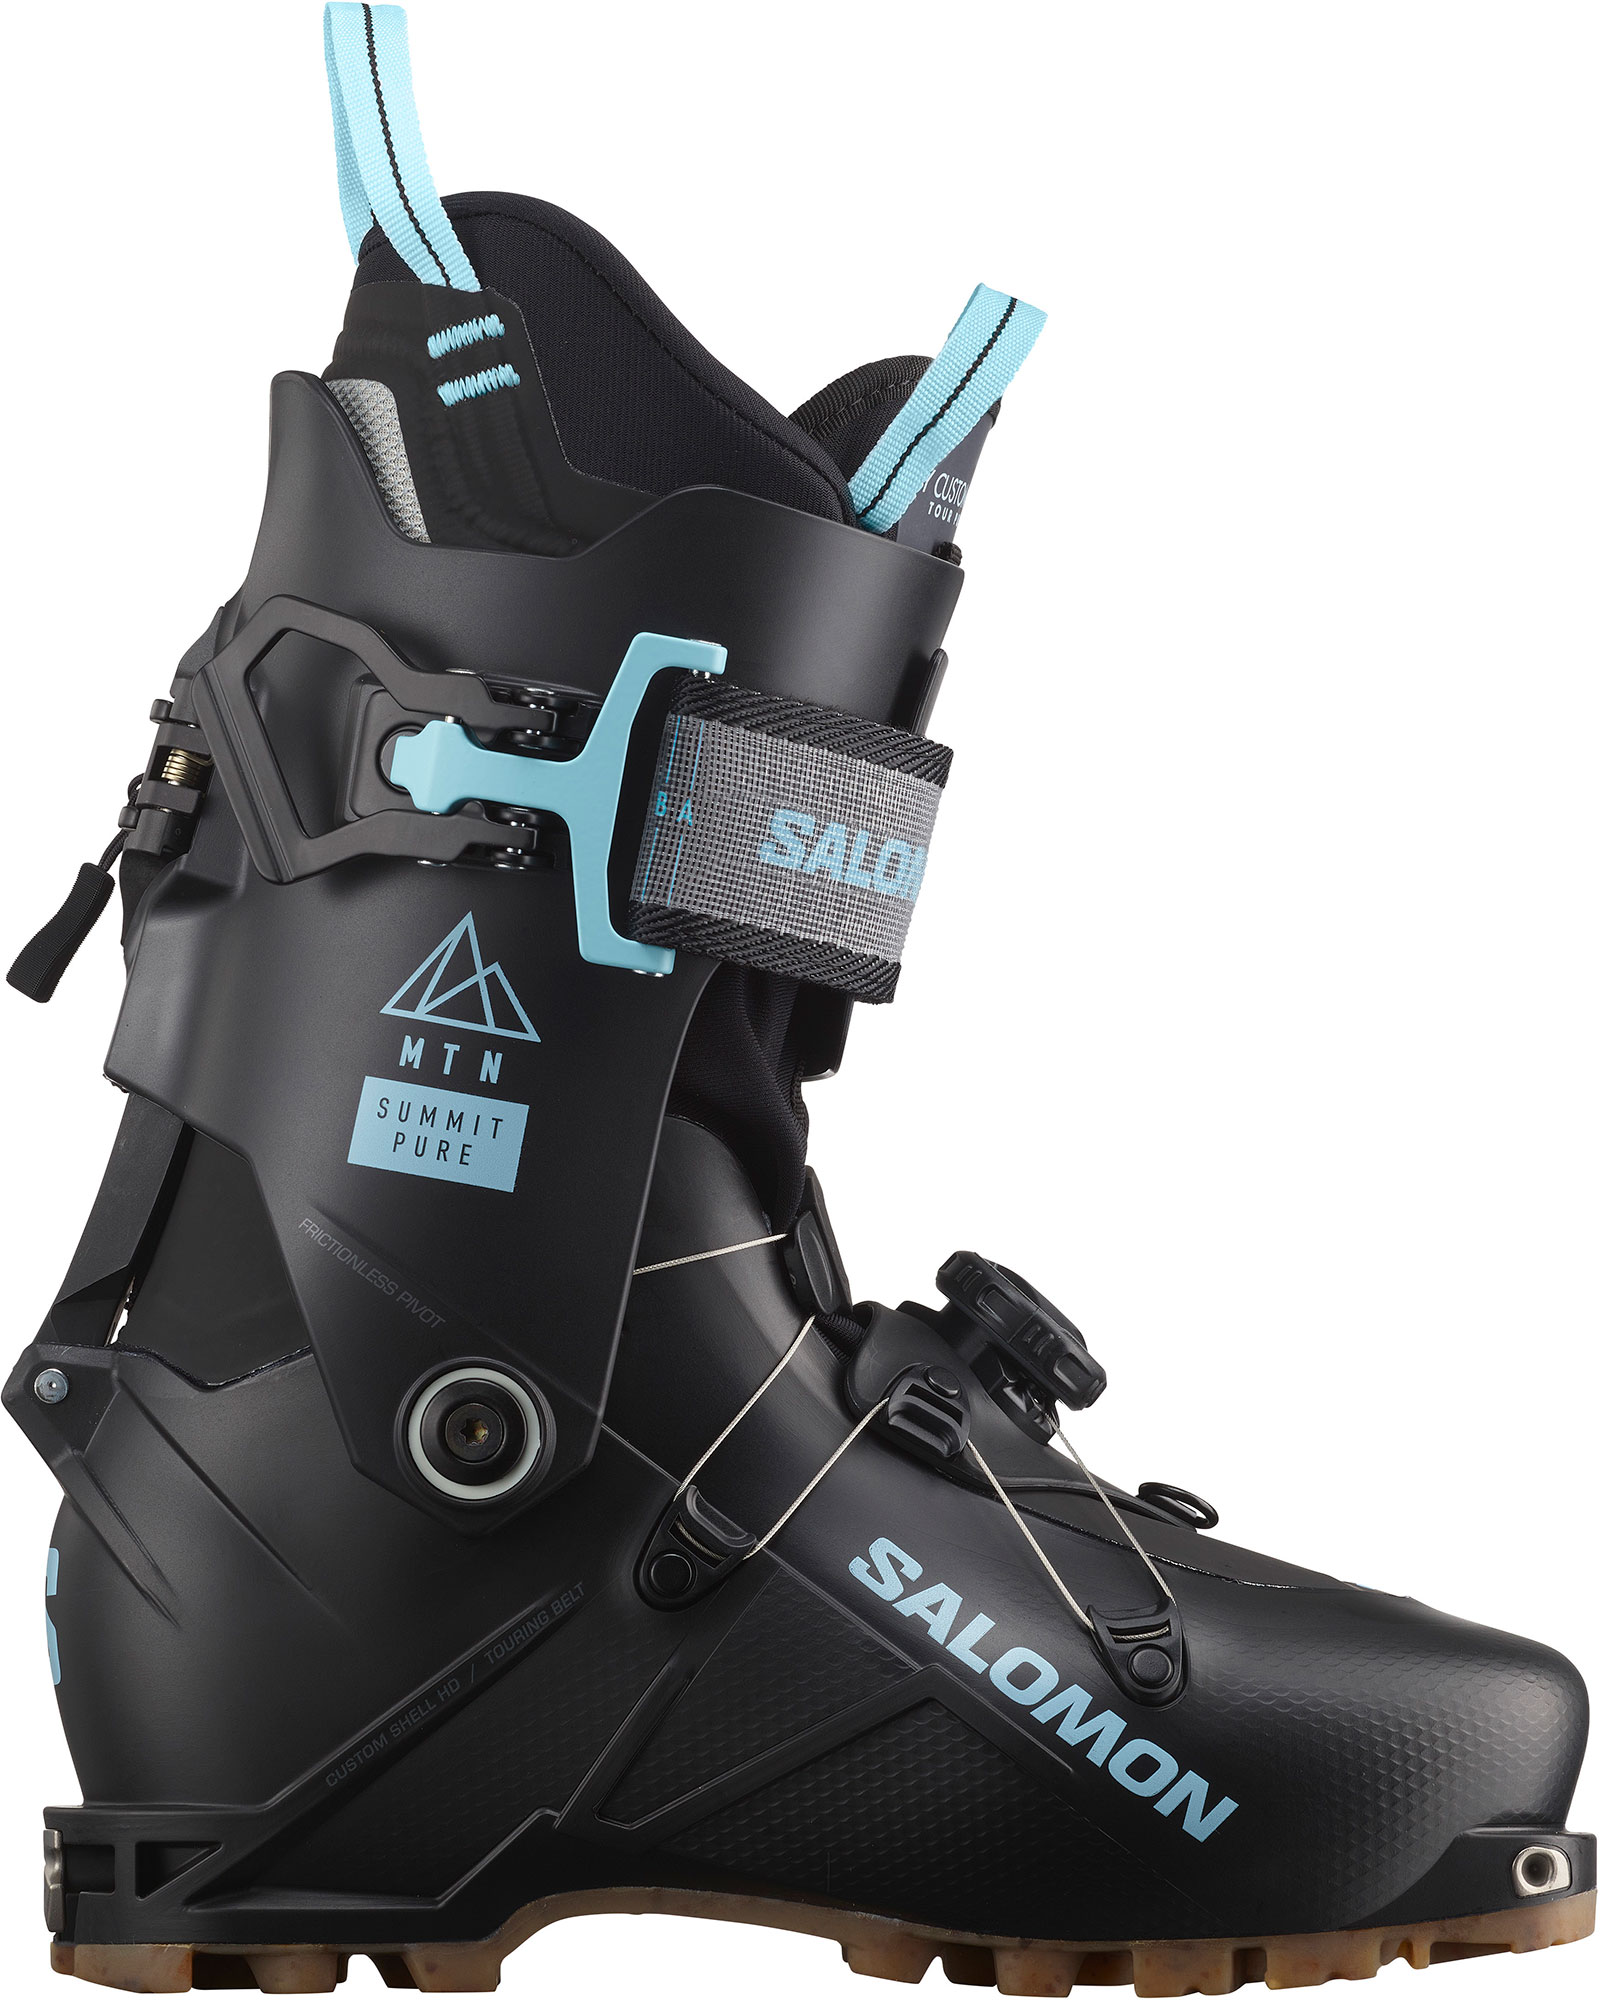 Salomon MTN Summit Pure Women’s Ski Boots 2023 - Black/Rainy Day MP 24.5